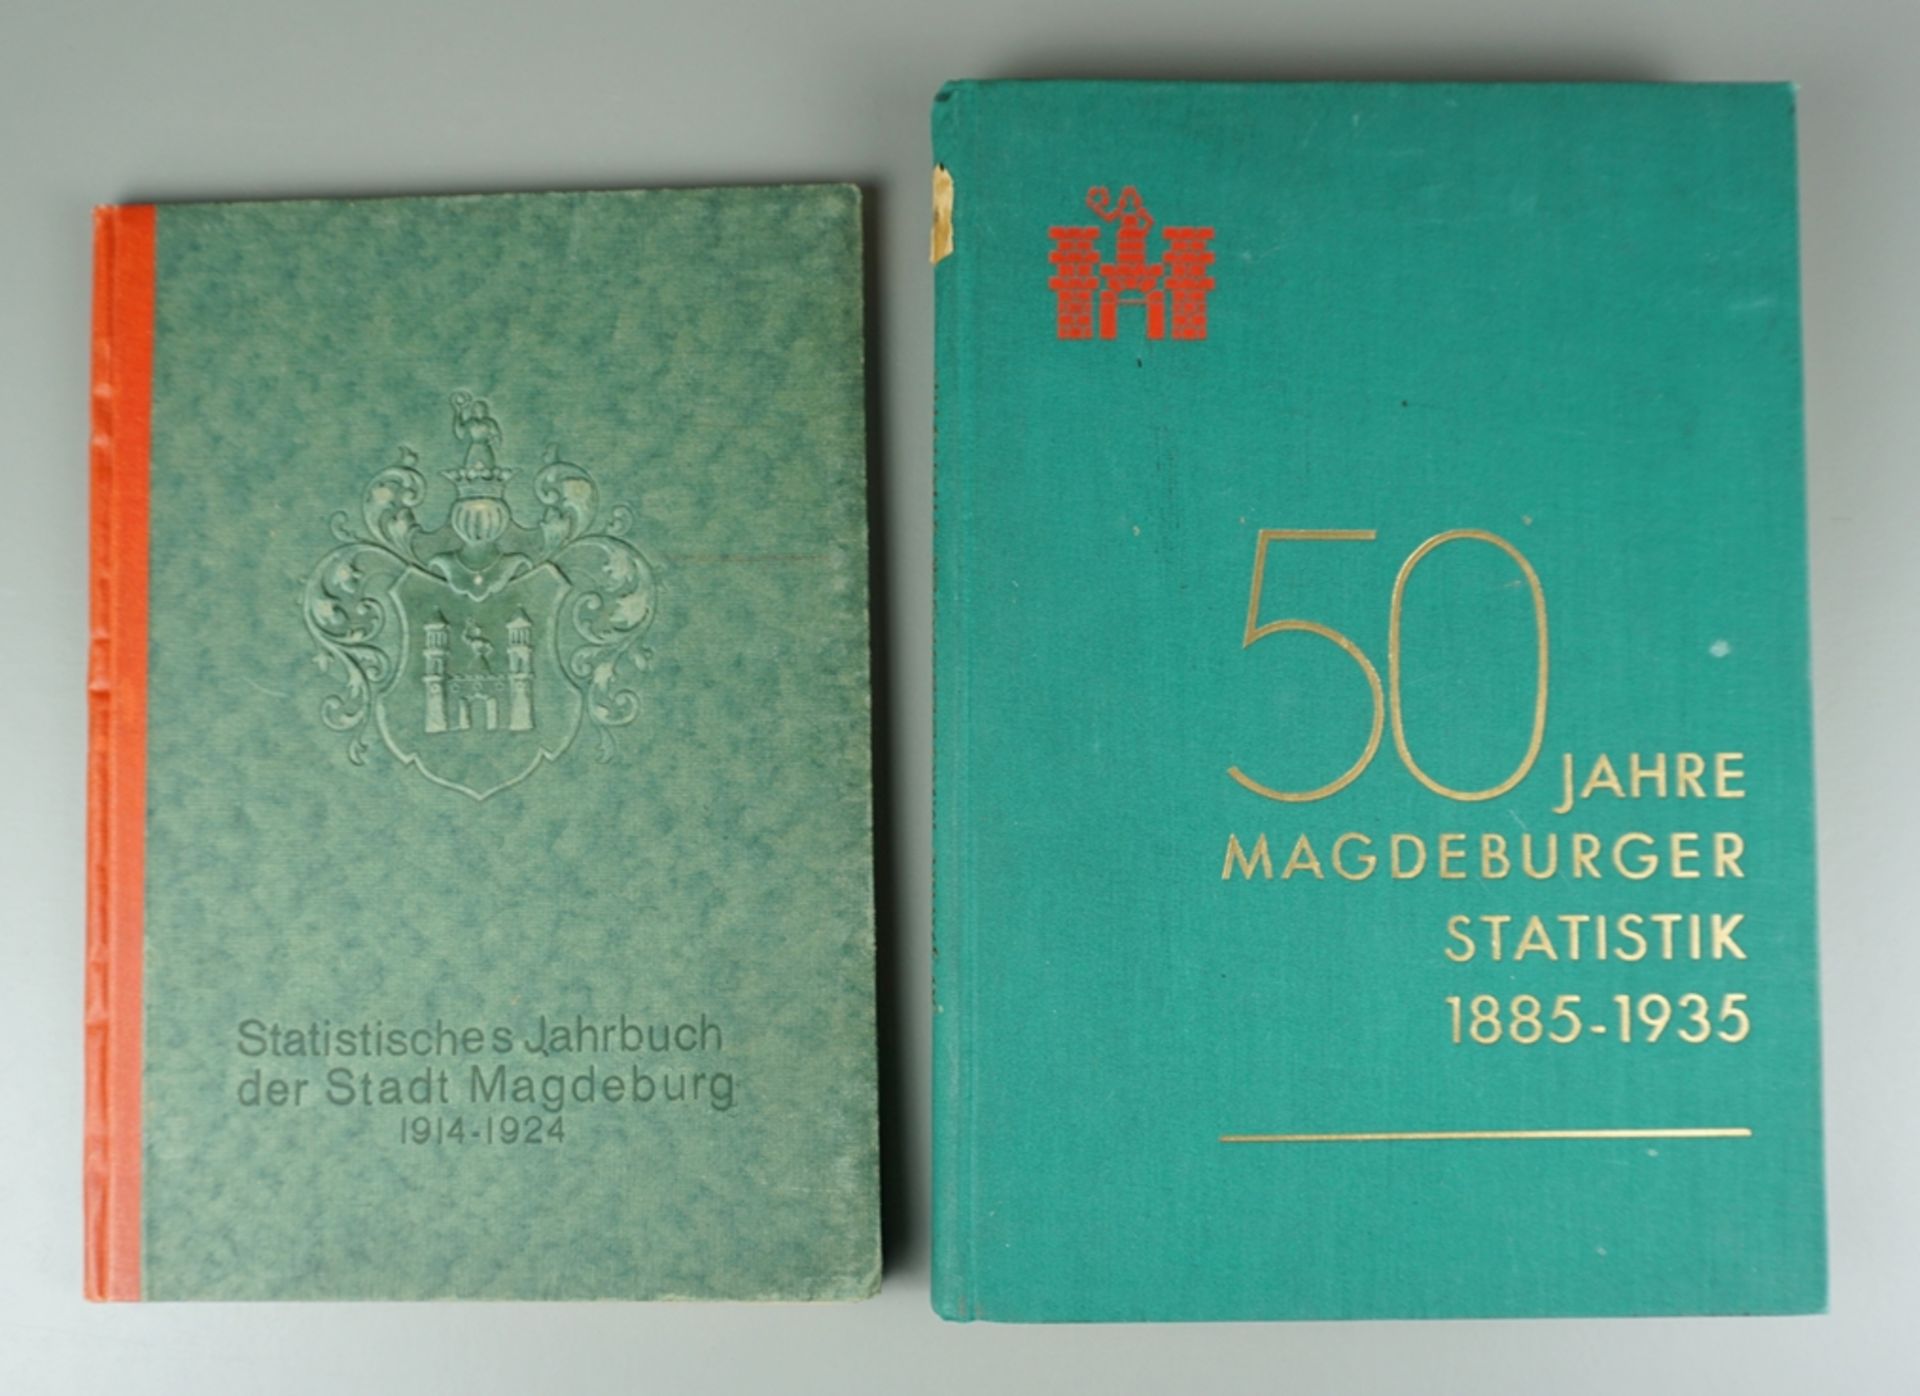 2 Magdeburger Statistikbücher, 1920-1930er Jahre